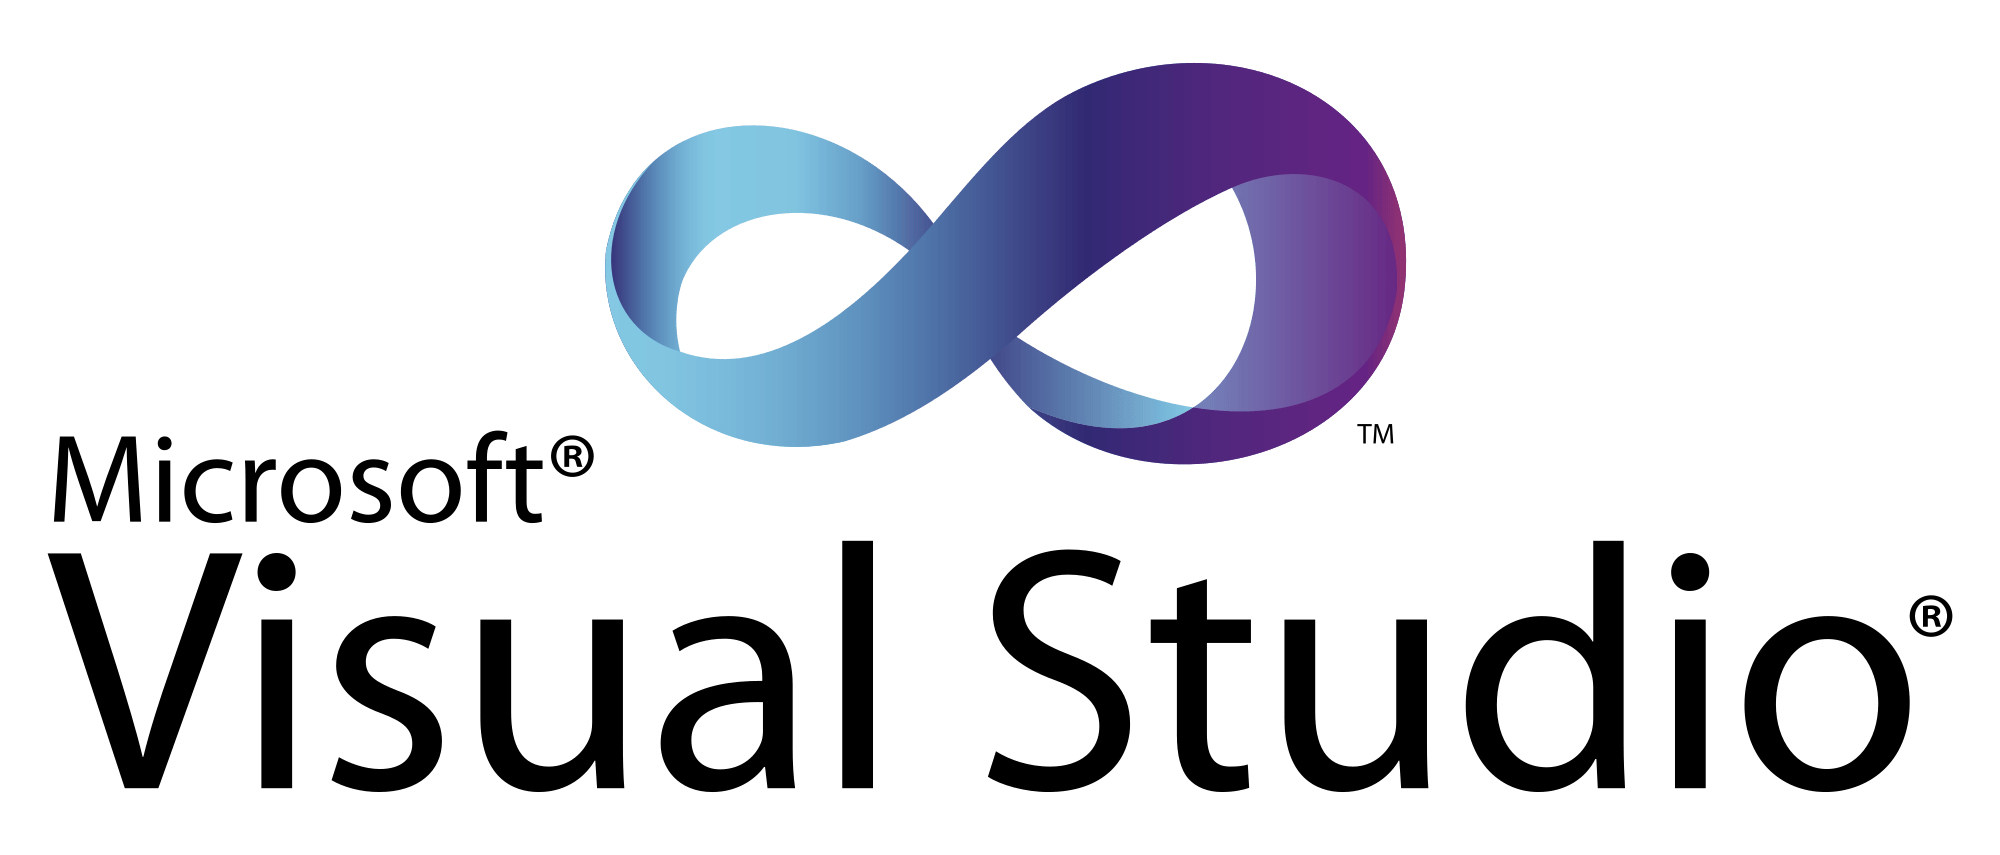 Visual Studio 2010 Logo - Datei:Microsoft Visual Studio 2010 Logo.svg